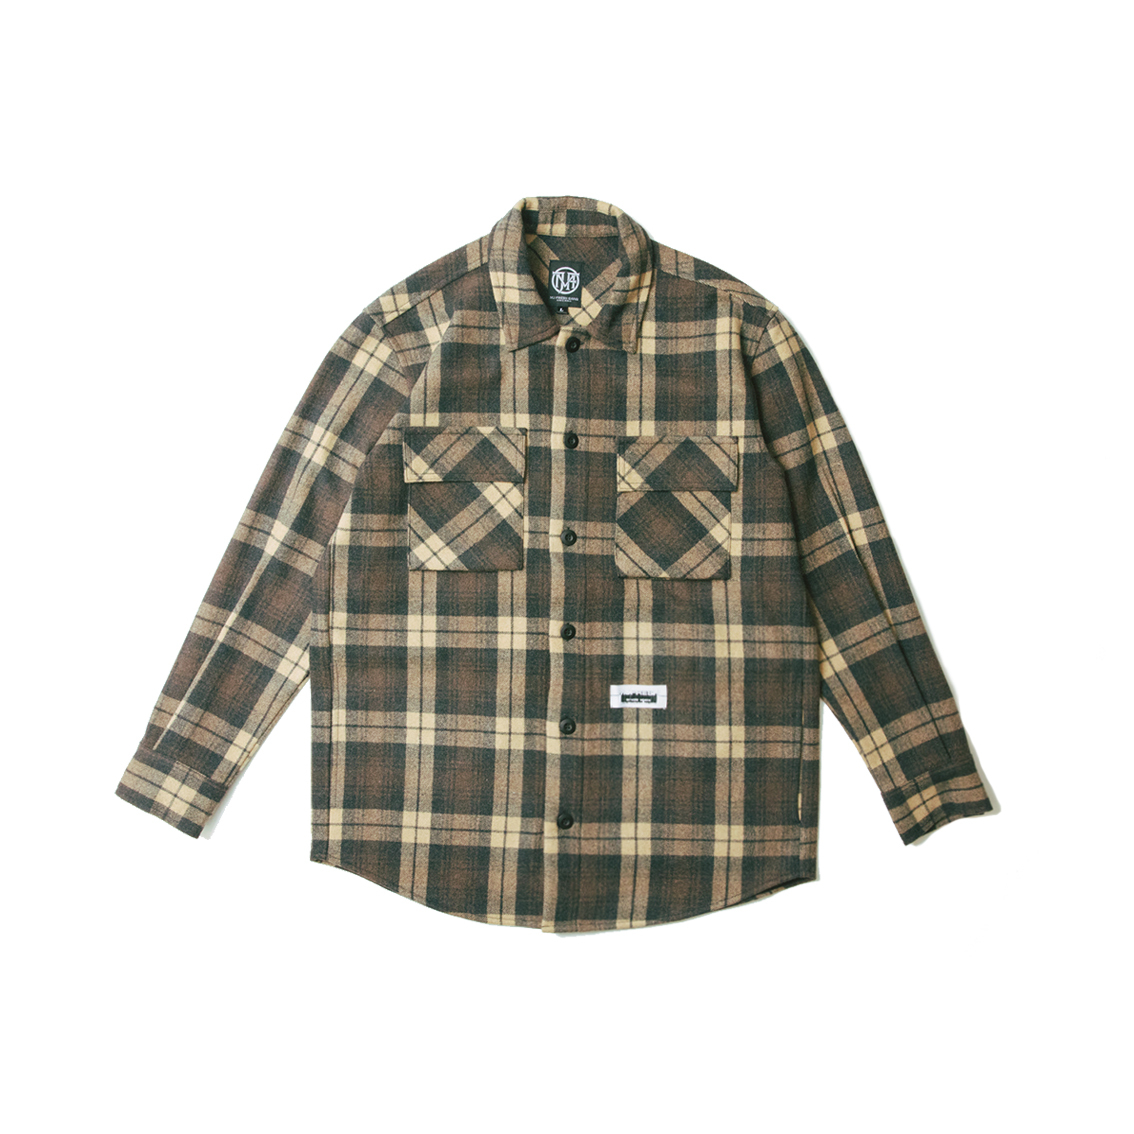 MJF Flannel Shirt Jacket